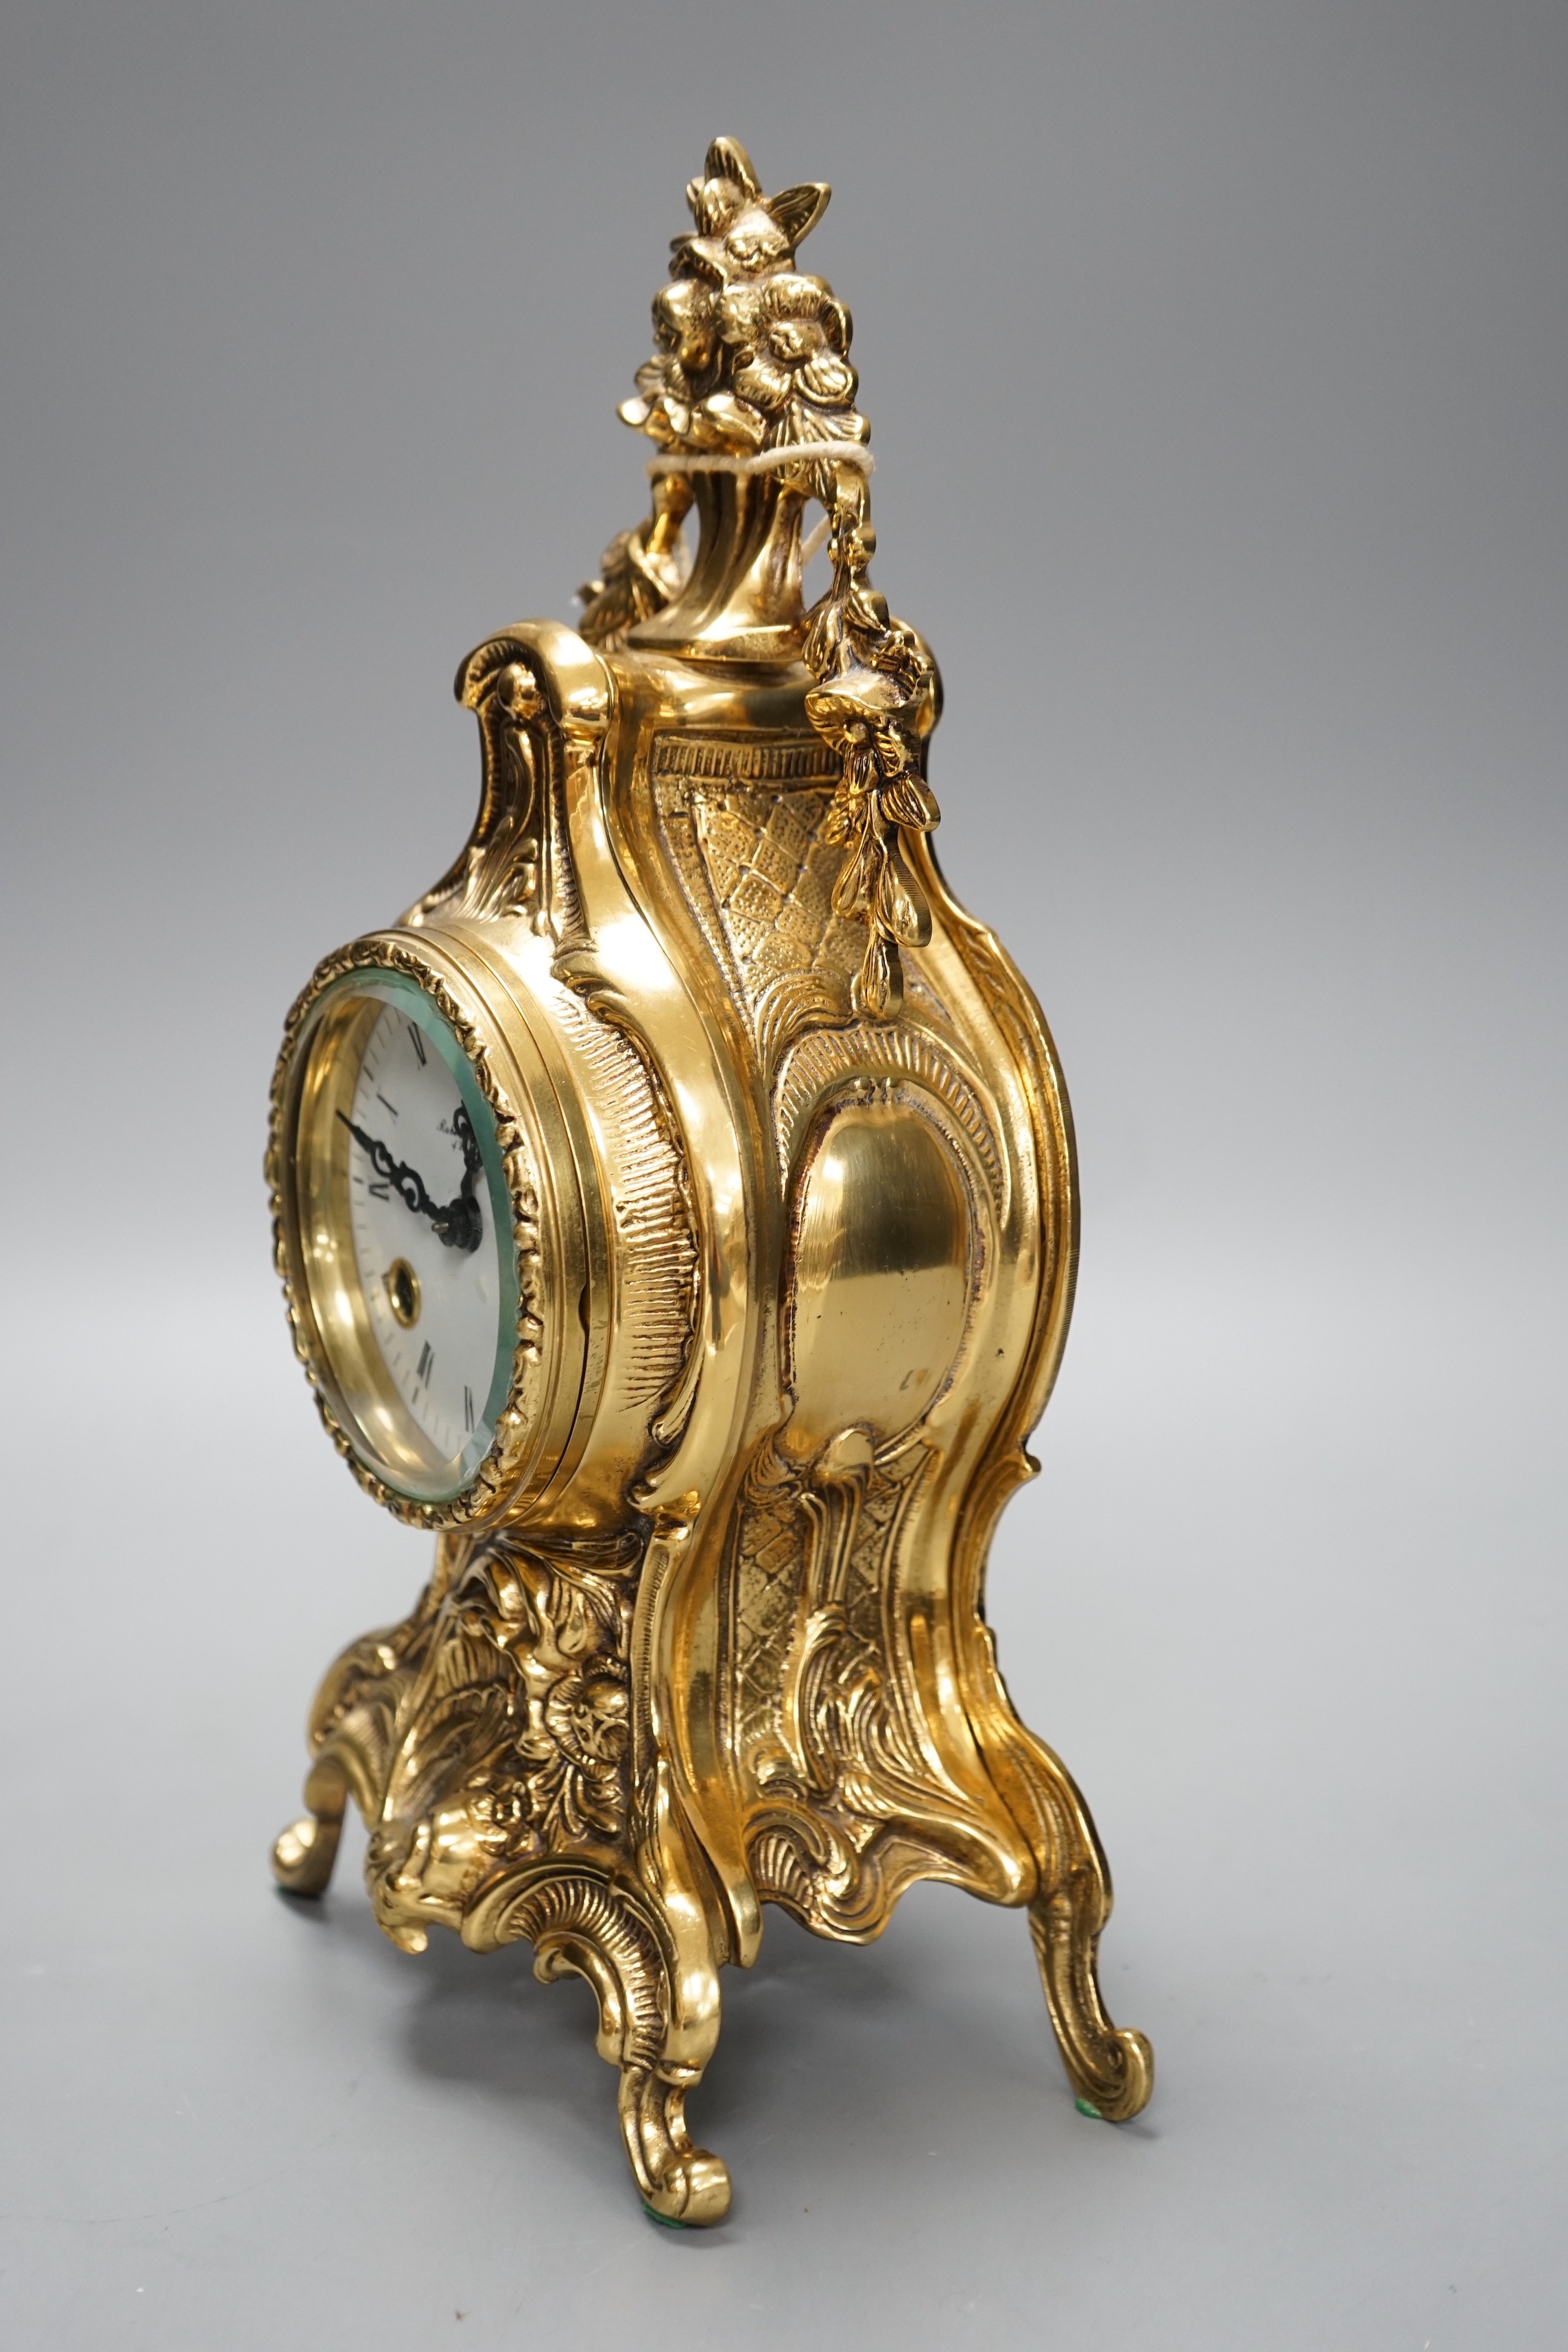 A Franz Hermle cast brass mantel clock, 123-070 movement, floating balance, eight day bim bam strike, 33cm